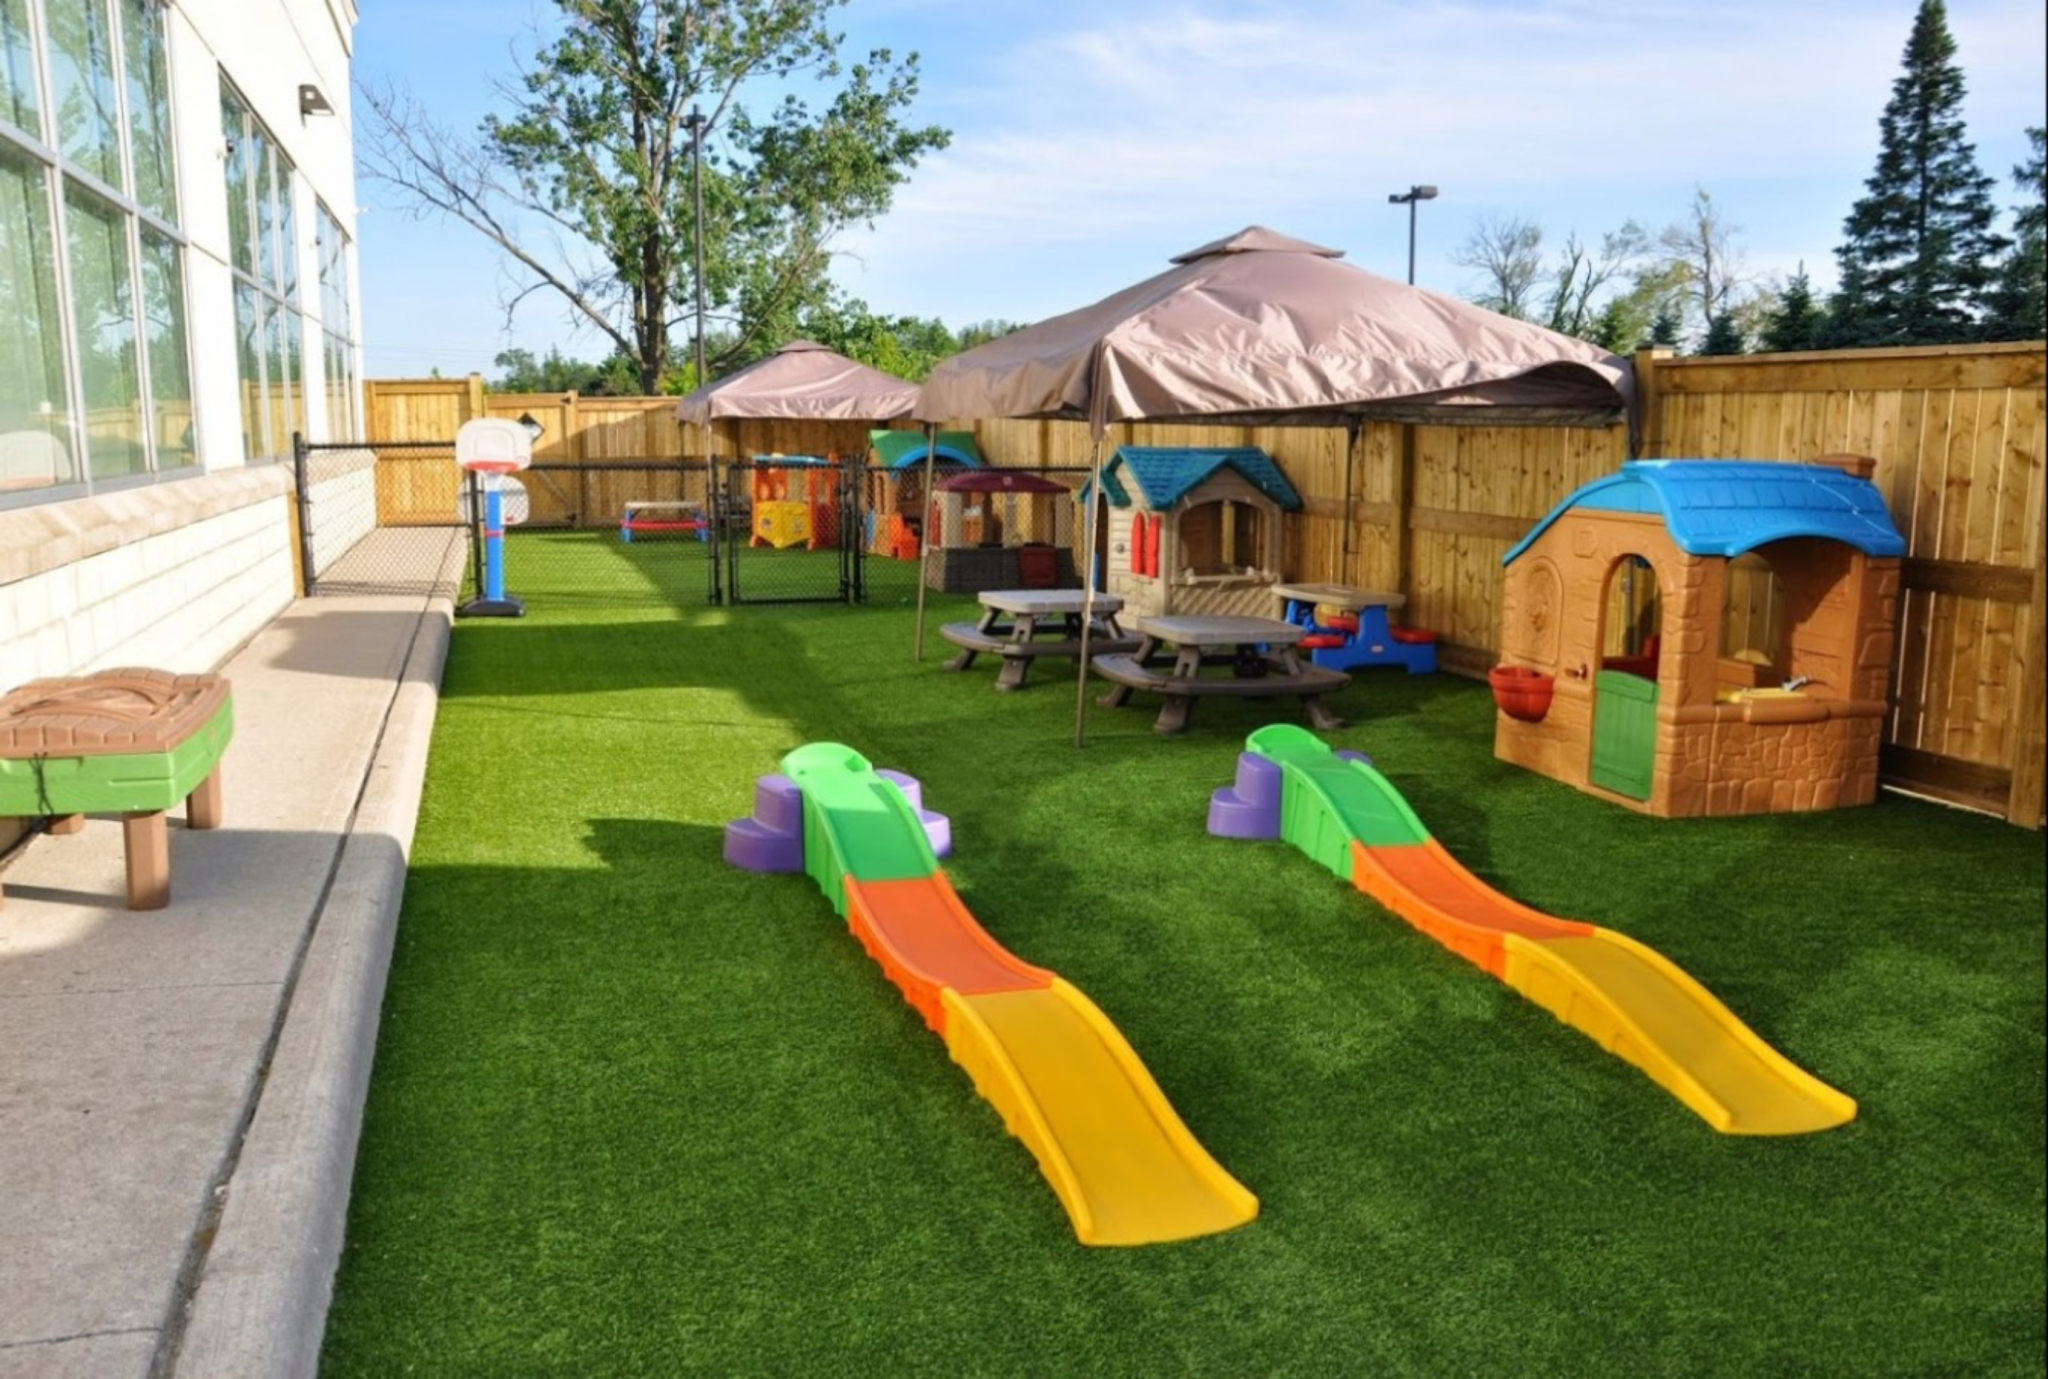 Kids love DT Playground Grass soft and safe